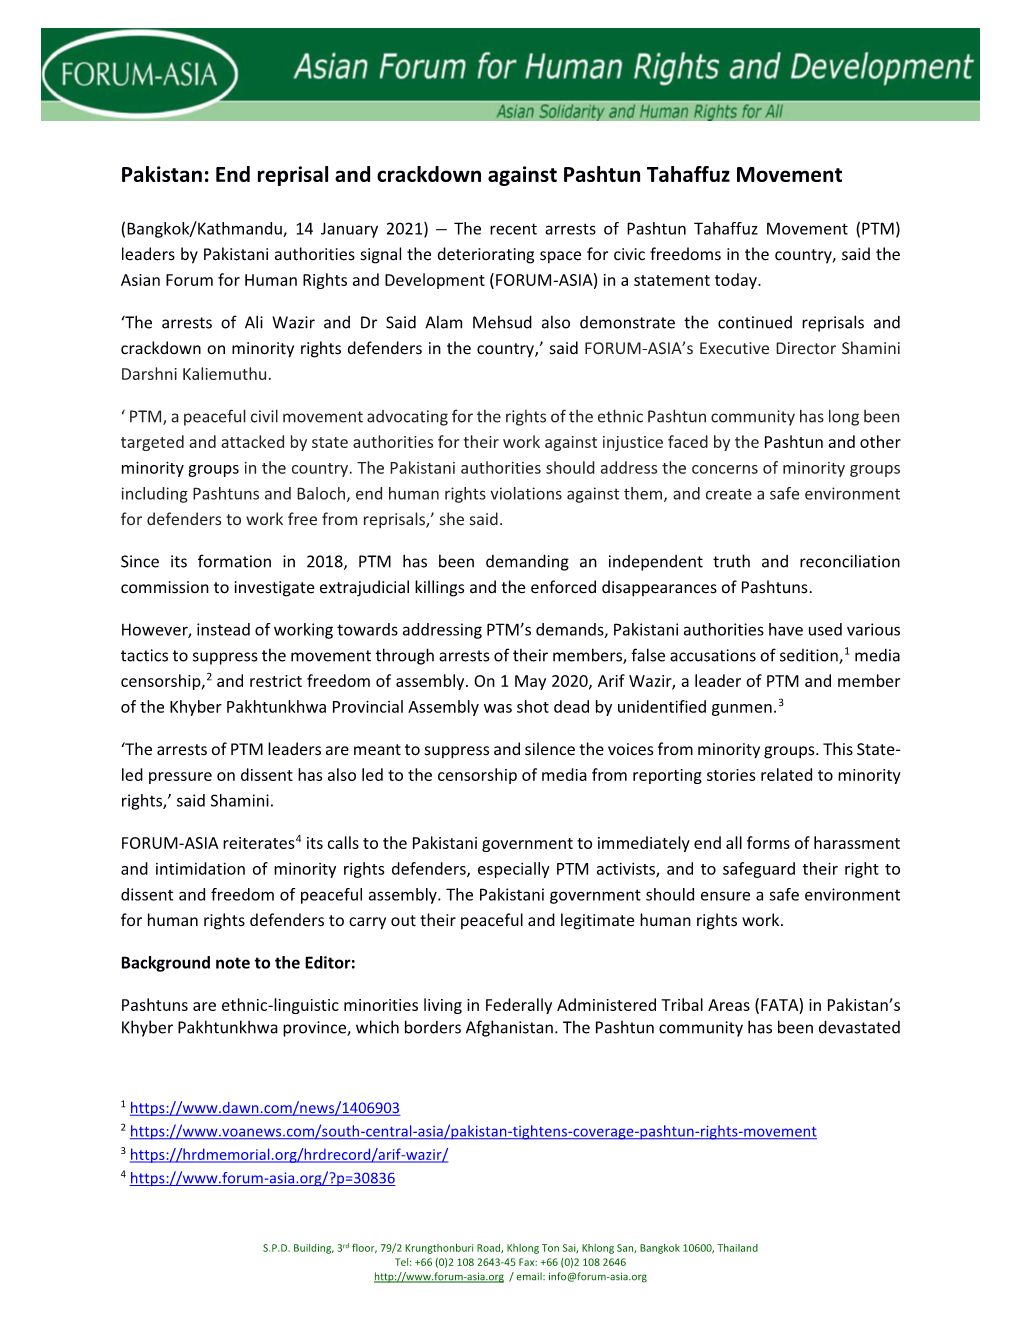 Pakistan: End Reprisal and Crackdown Against Pashtun Tahaffuz Movement